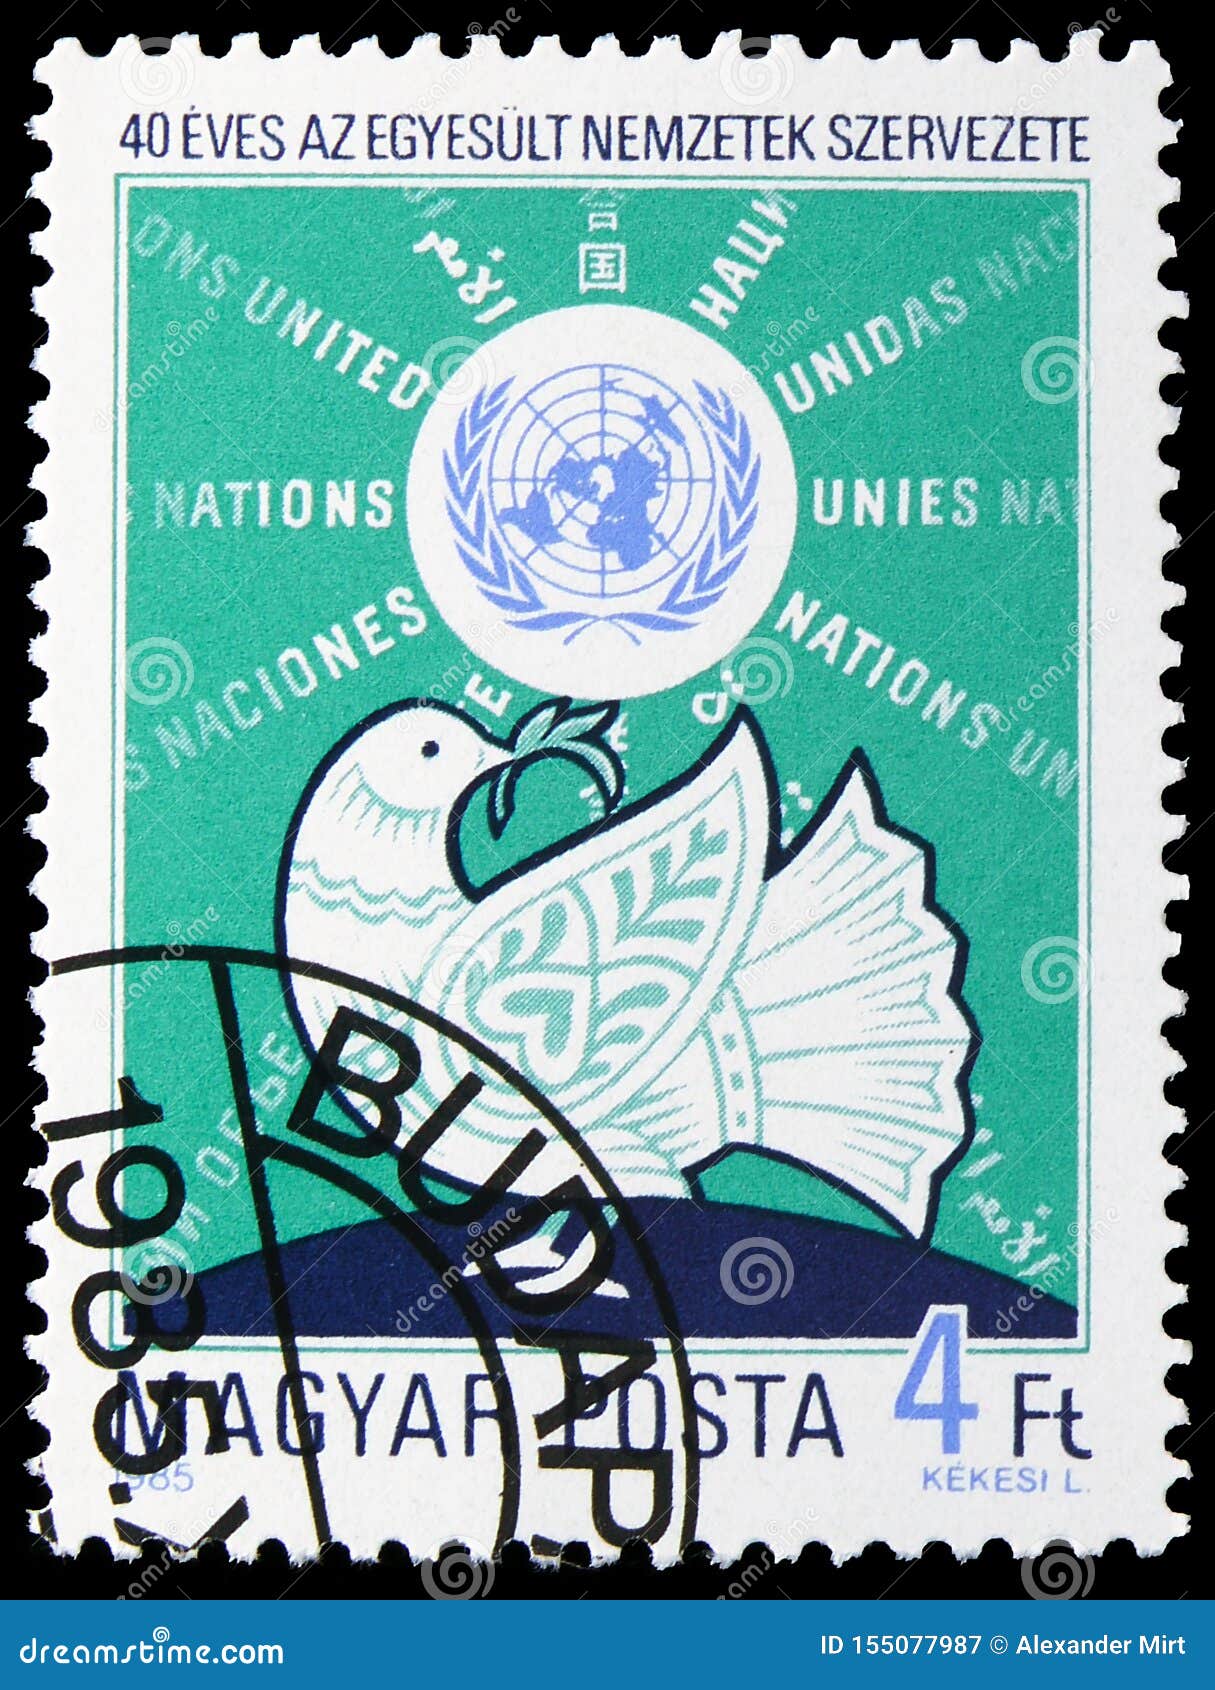 Оон 1985. Марки ООН. Голубь ООН. Голуби на марках. Почтовая марка Армении ООН.